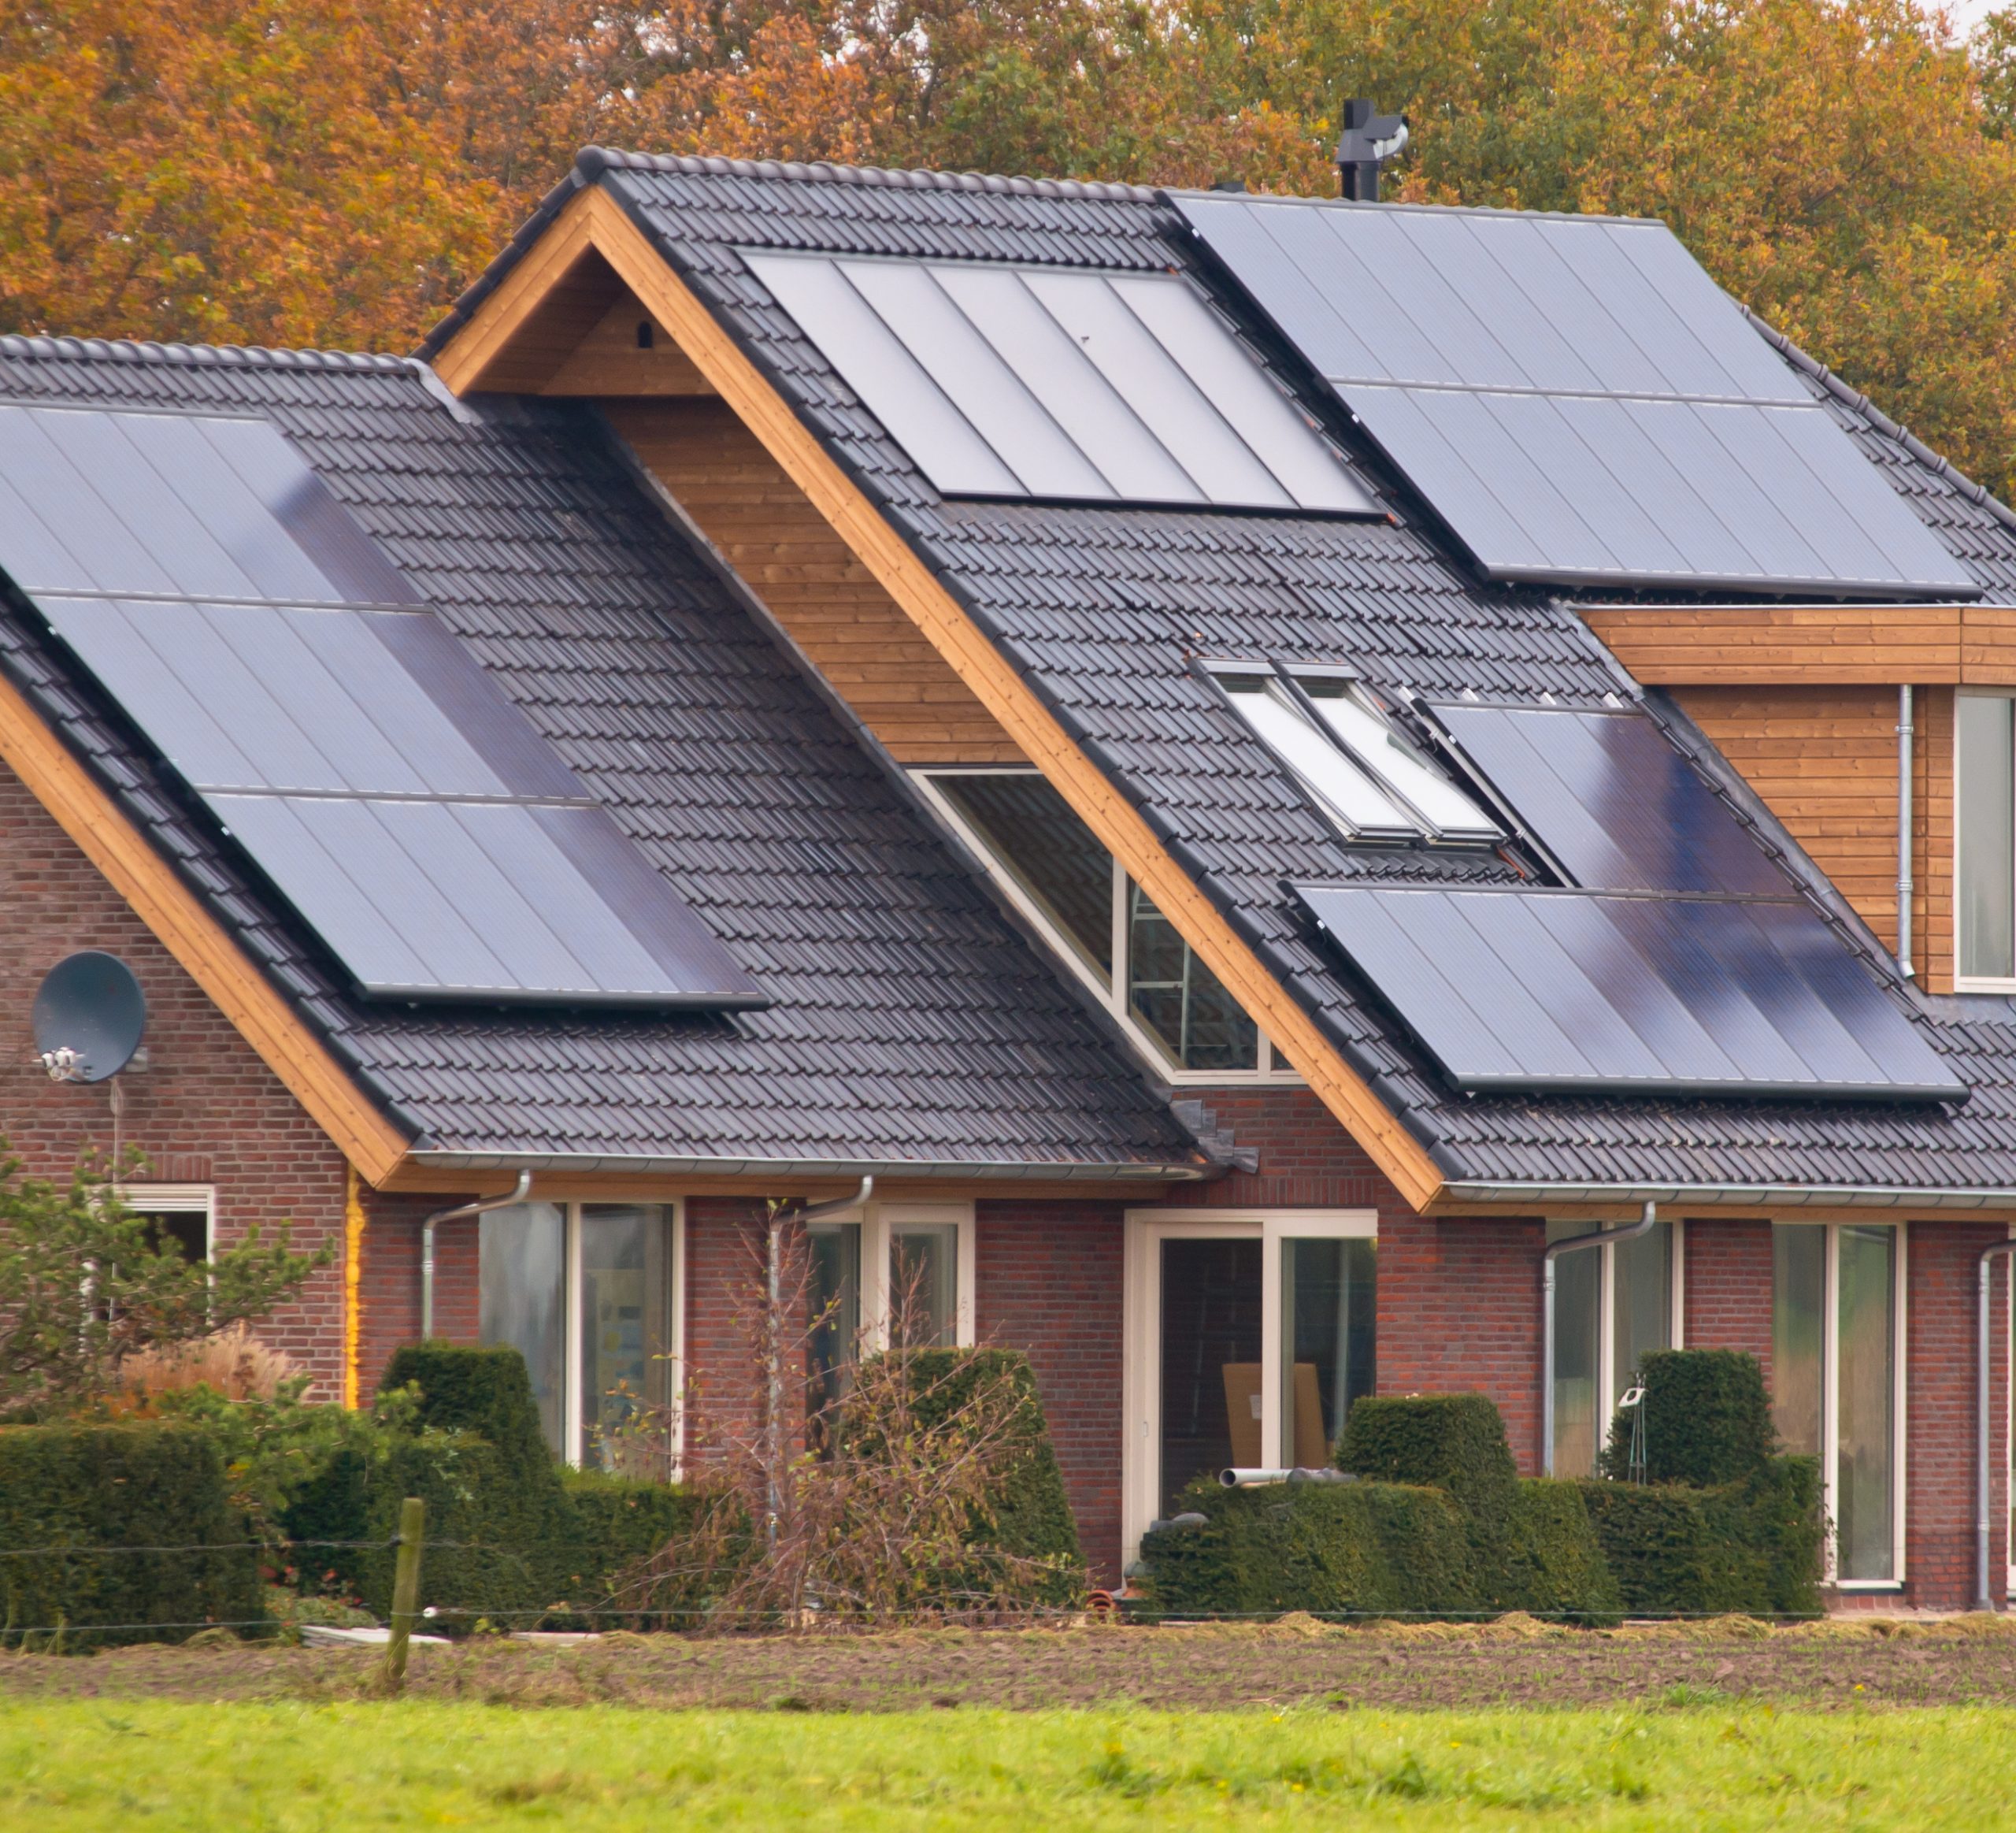 Photovoltaic Solar Panels Cambridge